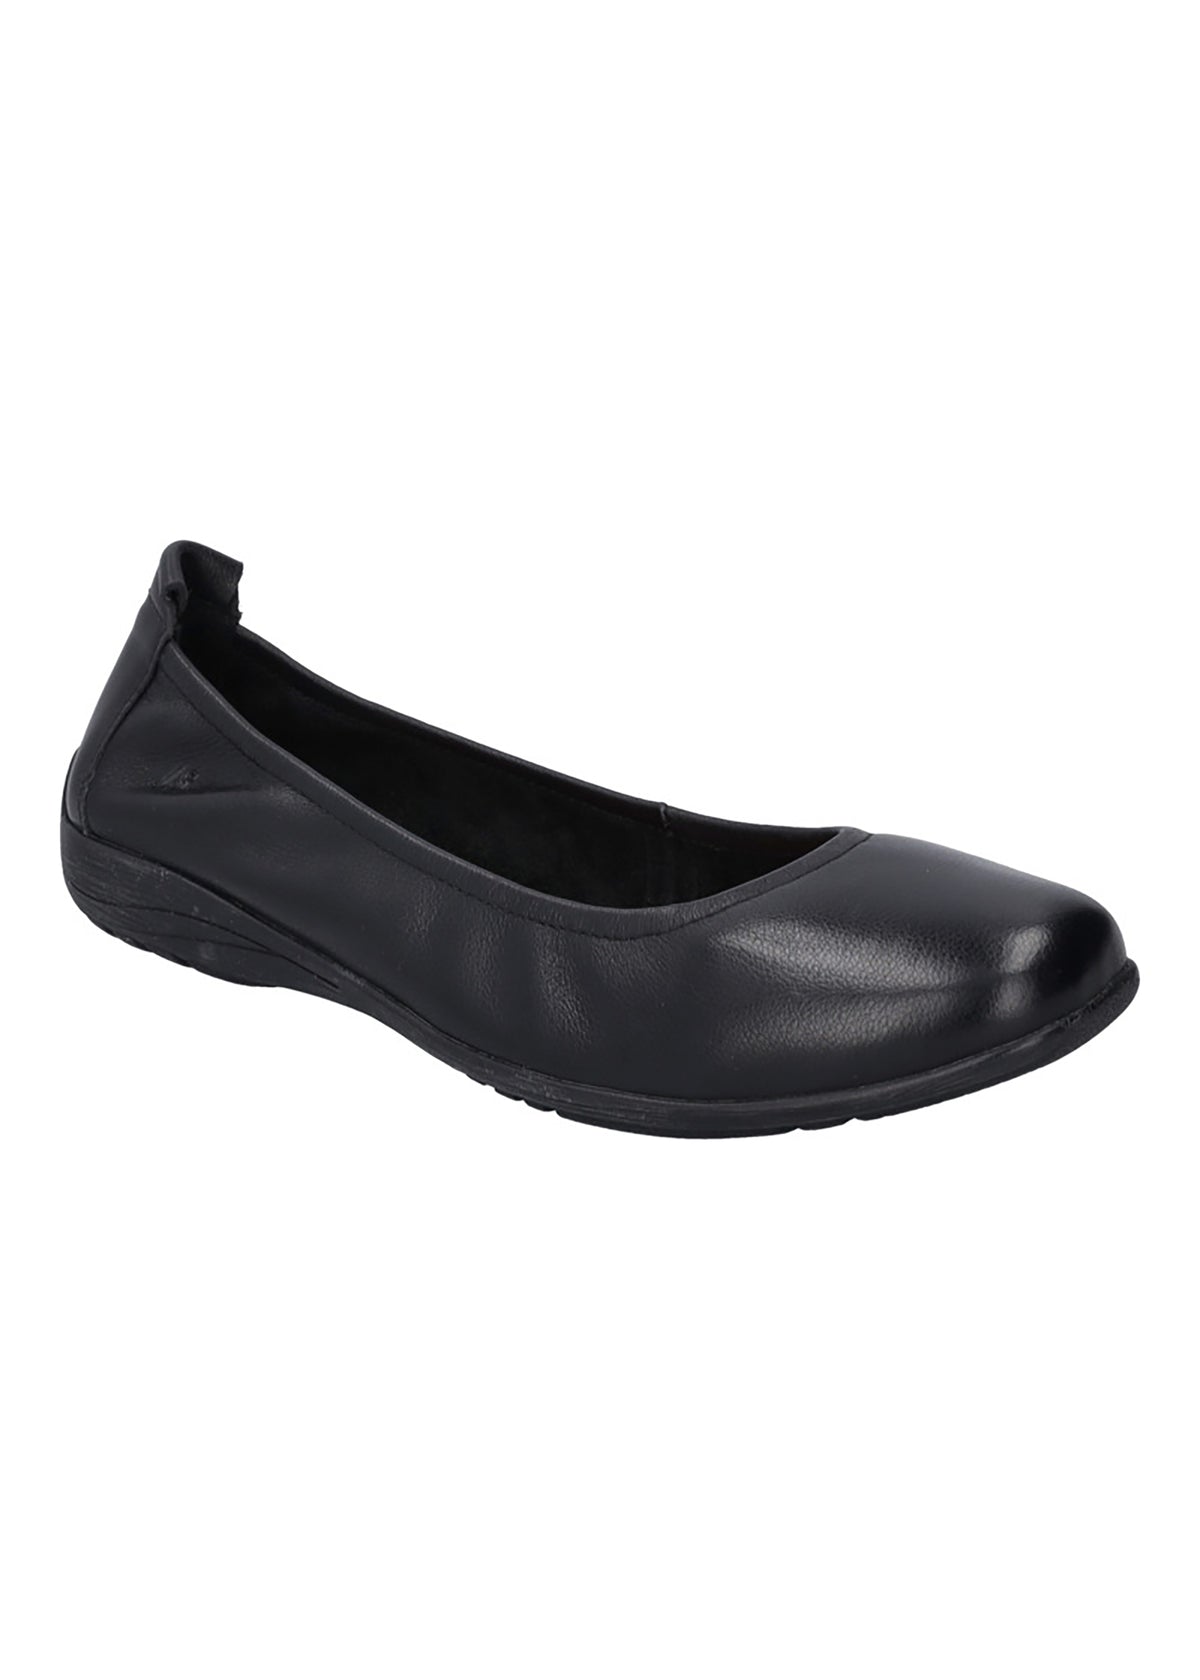 Ballerinaskor - svart läder, Fenja 01